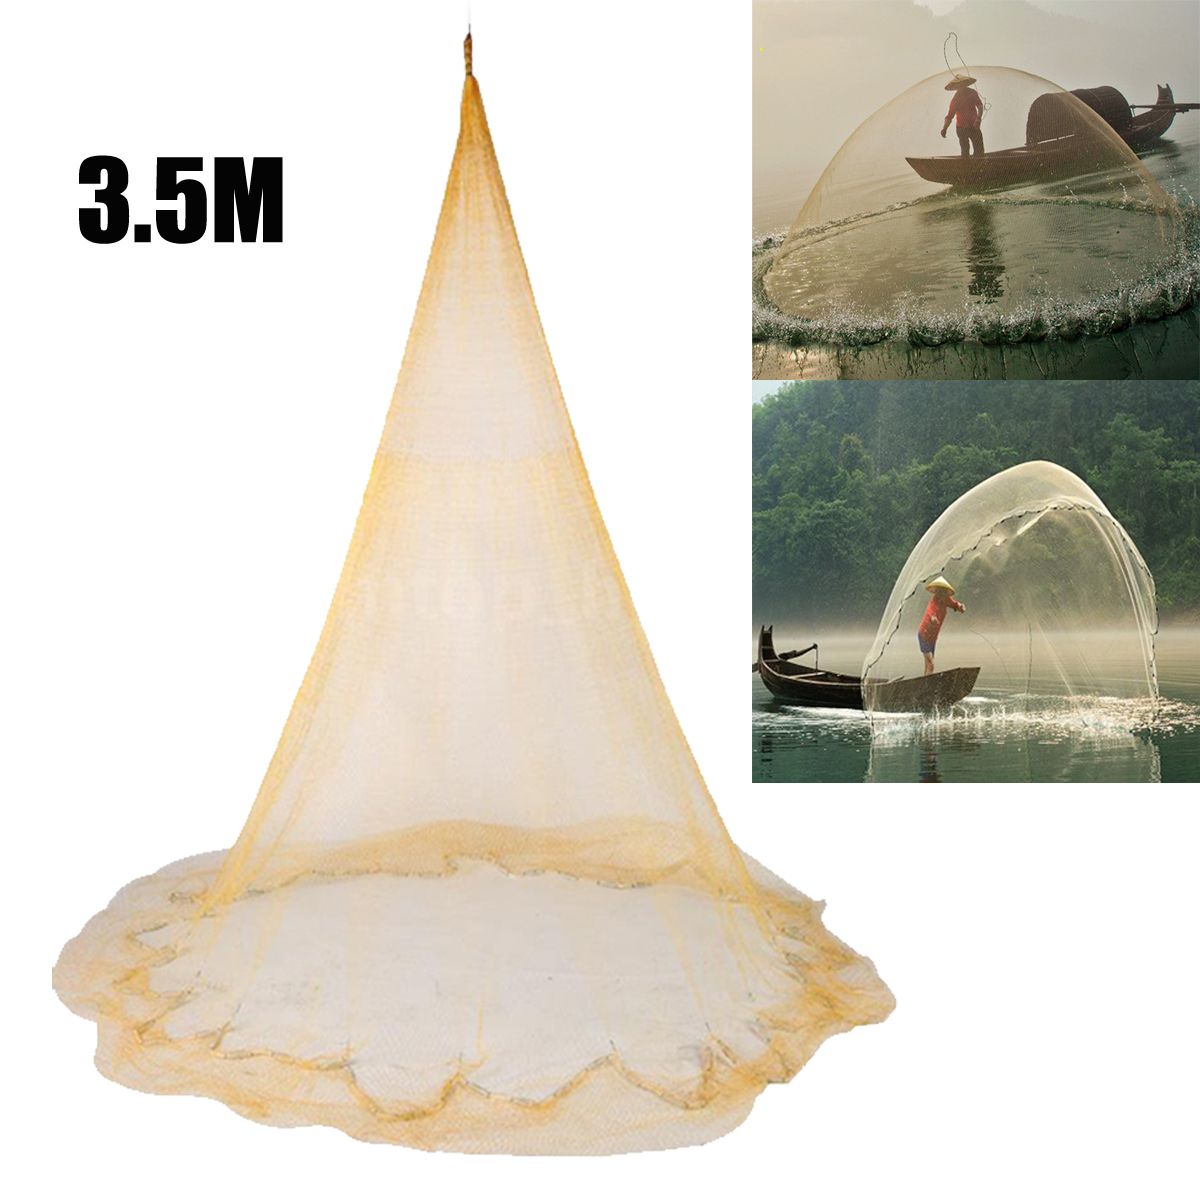 35M4M-Fishing-Nylon-Monofilament-Fish-Gill-Net-Easy-Throw-For-Hand-Casting-Spin-Network-Bait-Sinker-1420295